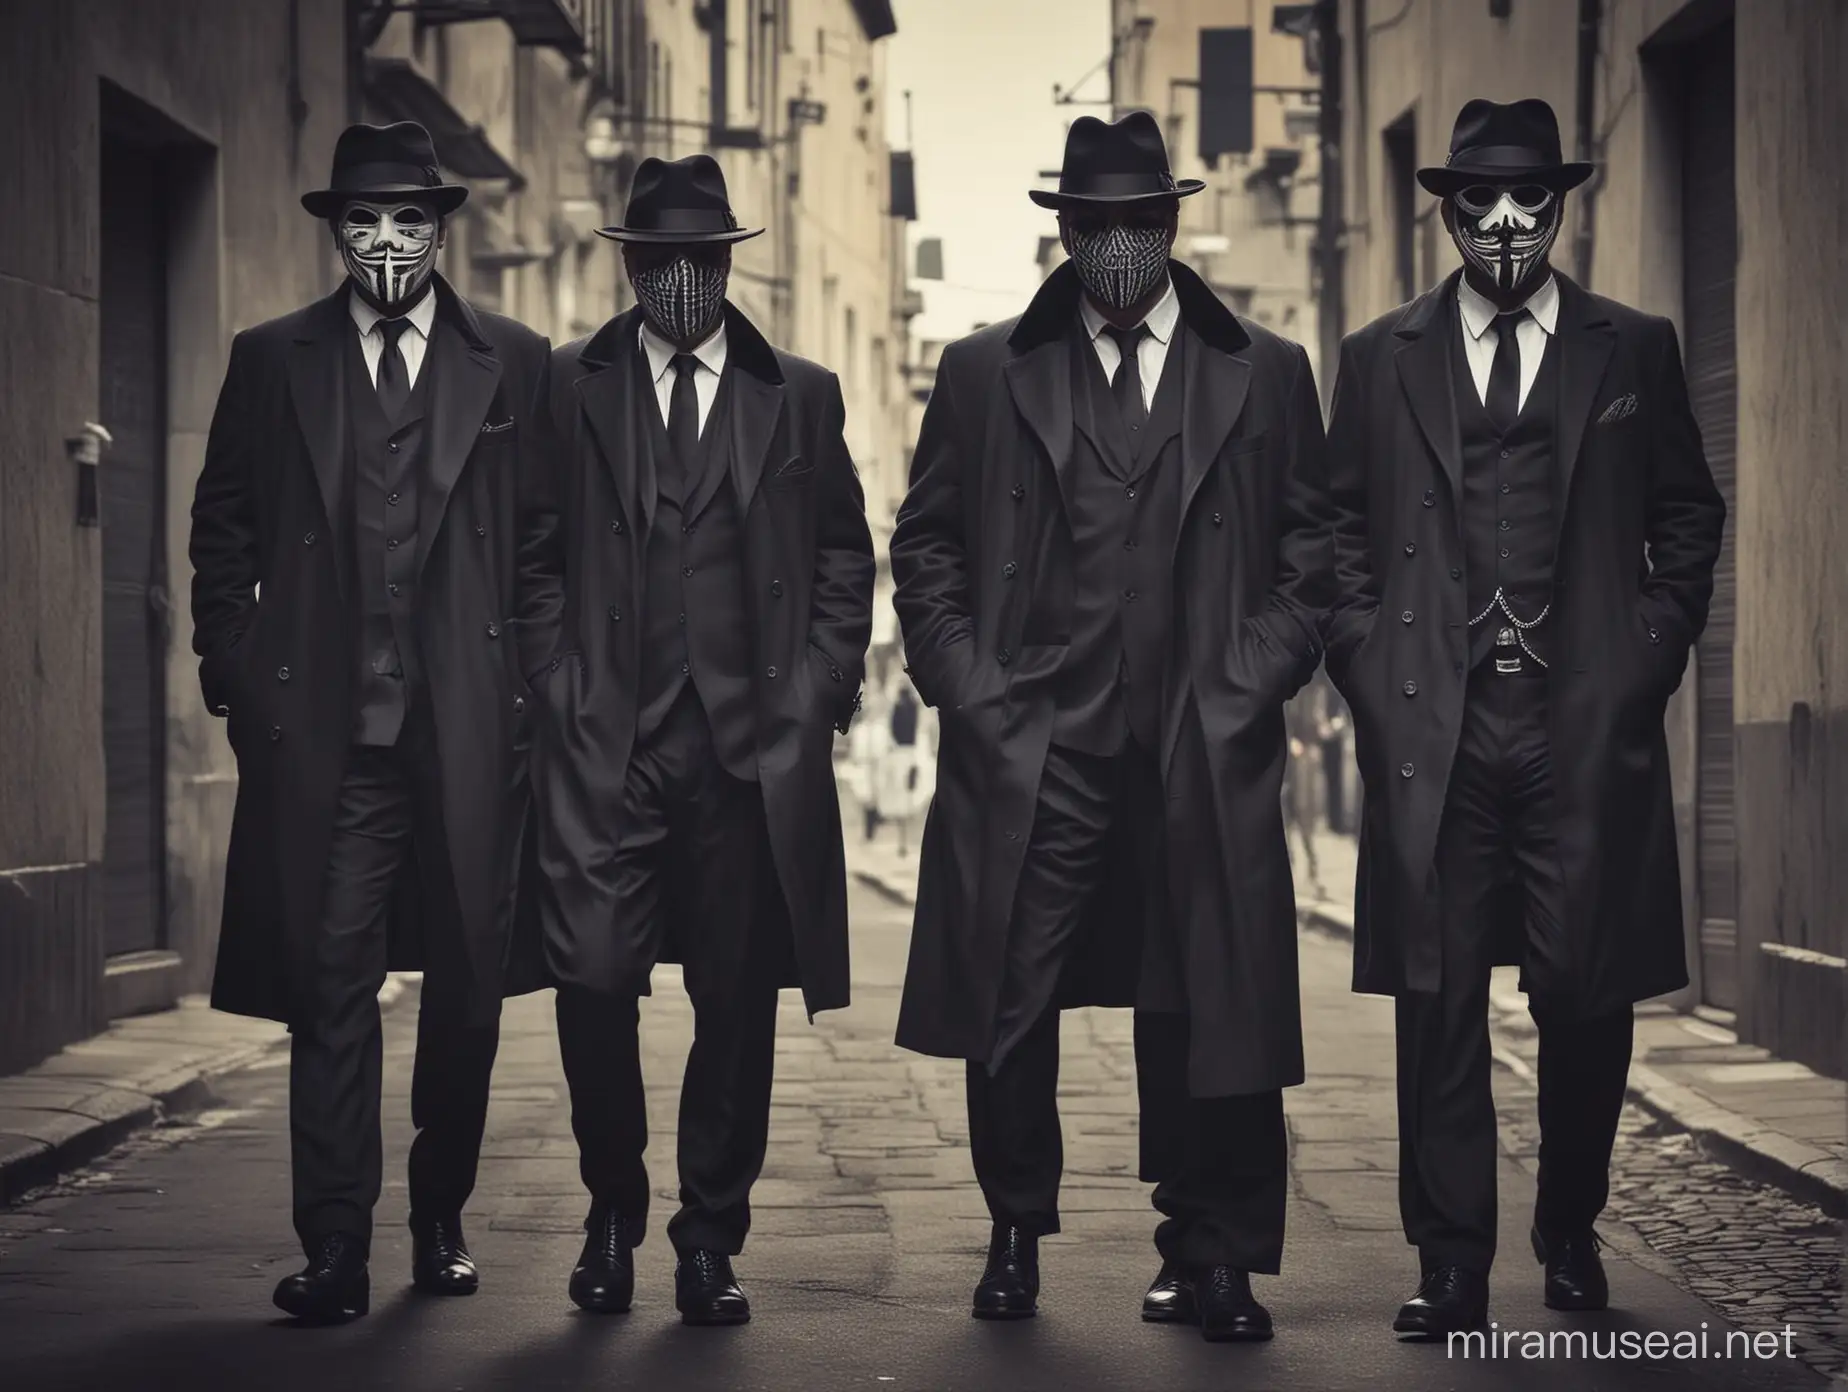 Undercover Mafia Members in Shadowy Meeting